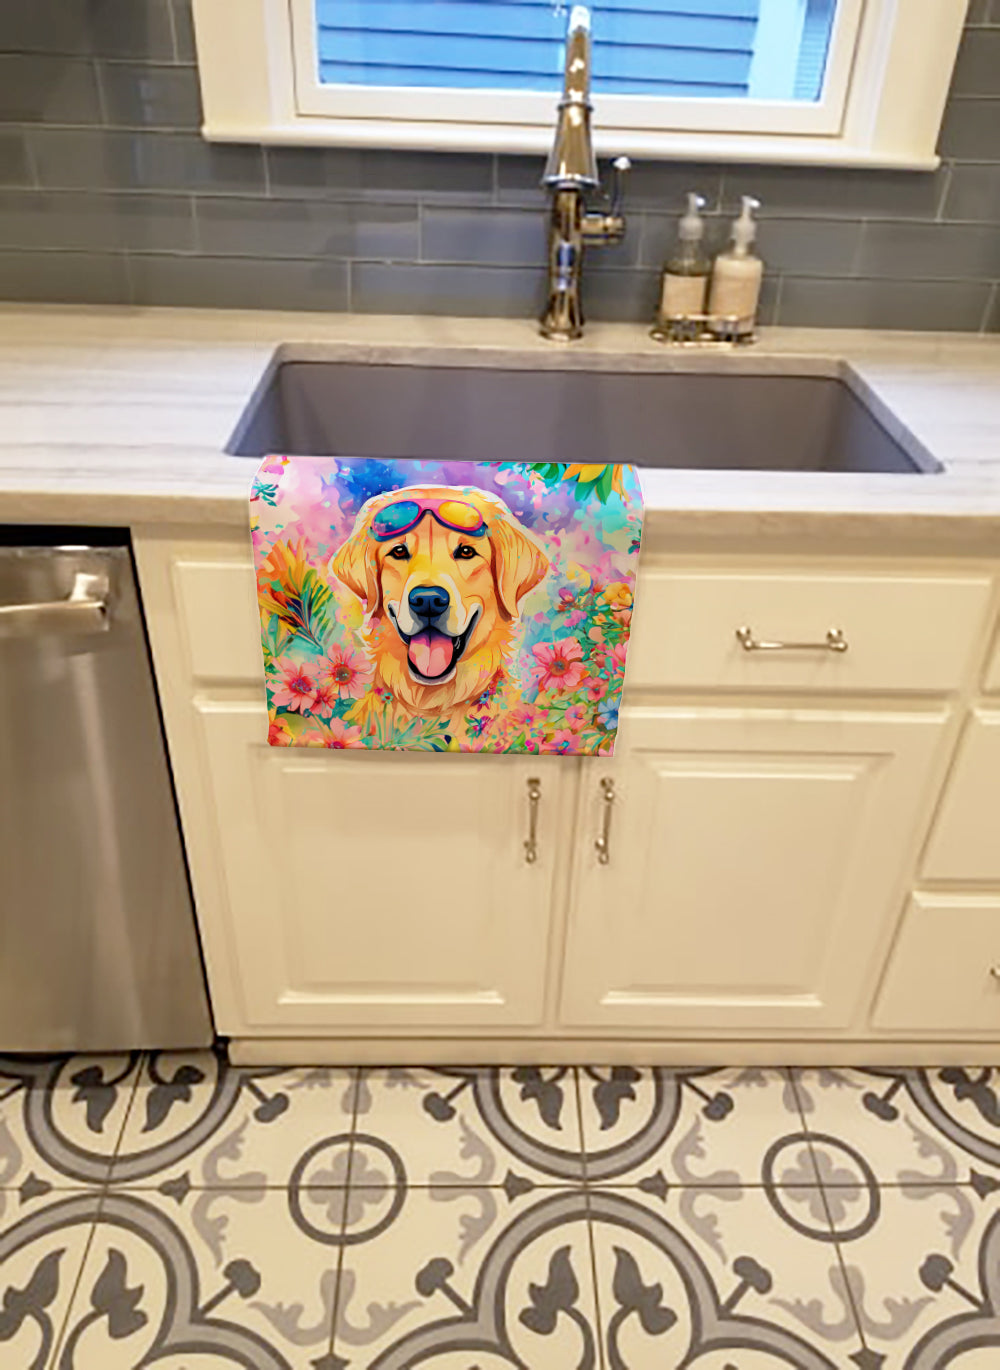 Buy this Yellow Labrador Hippie Dawg Kitchen Towel